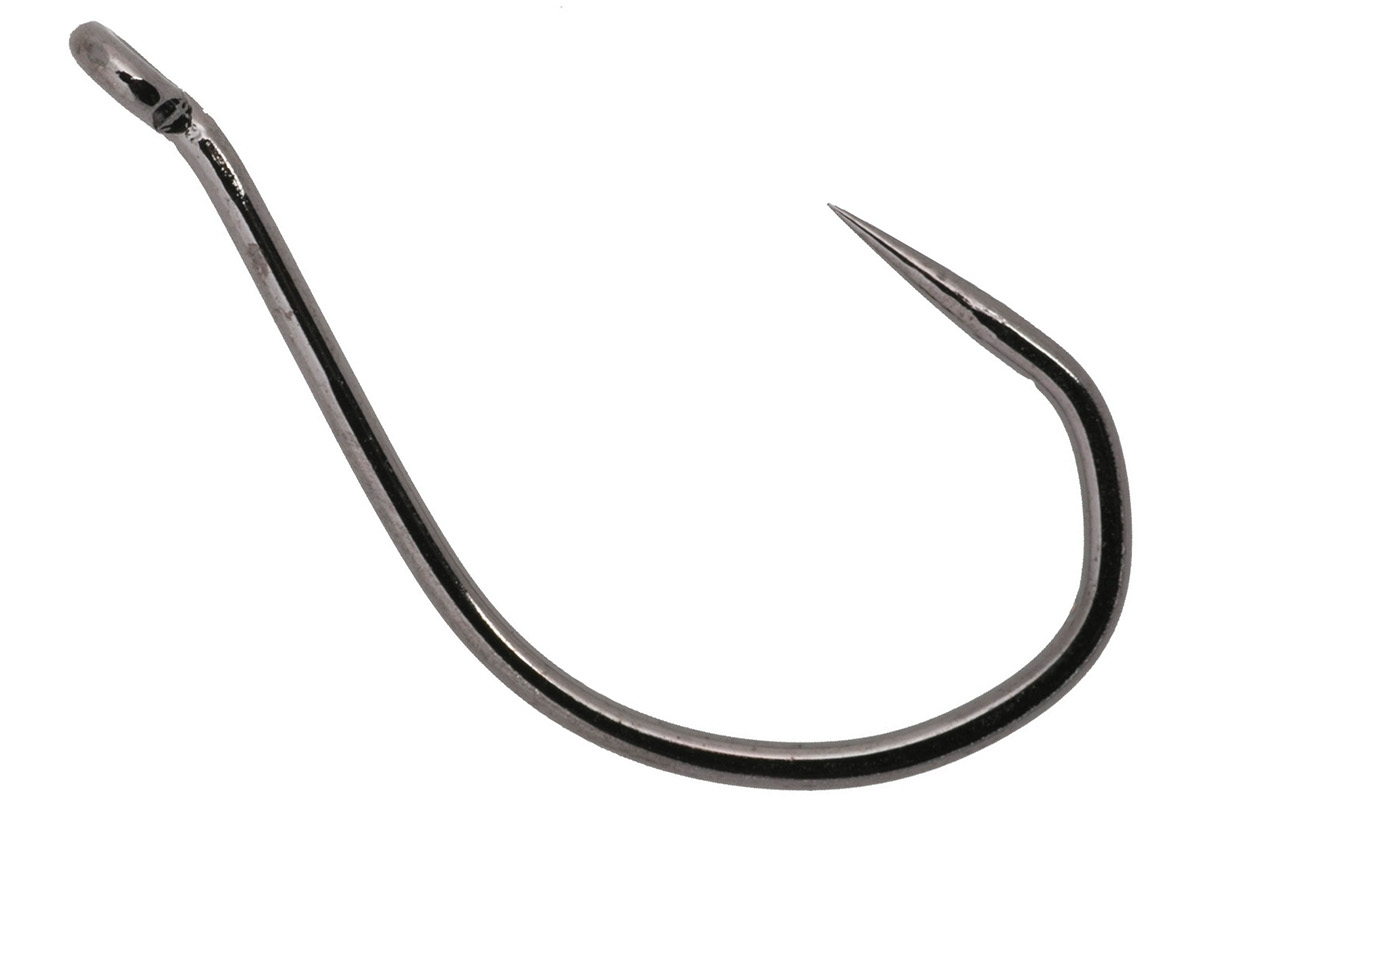 Owner® 5178 SSW Up-eye circle hooks – Rebel Fishing Alliance